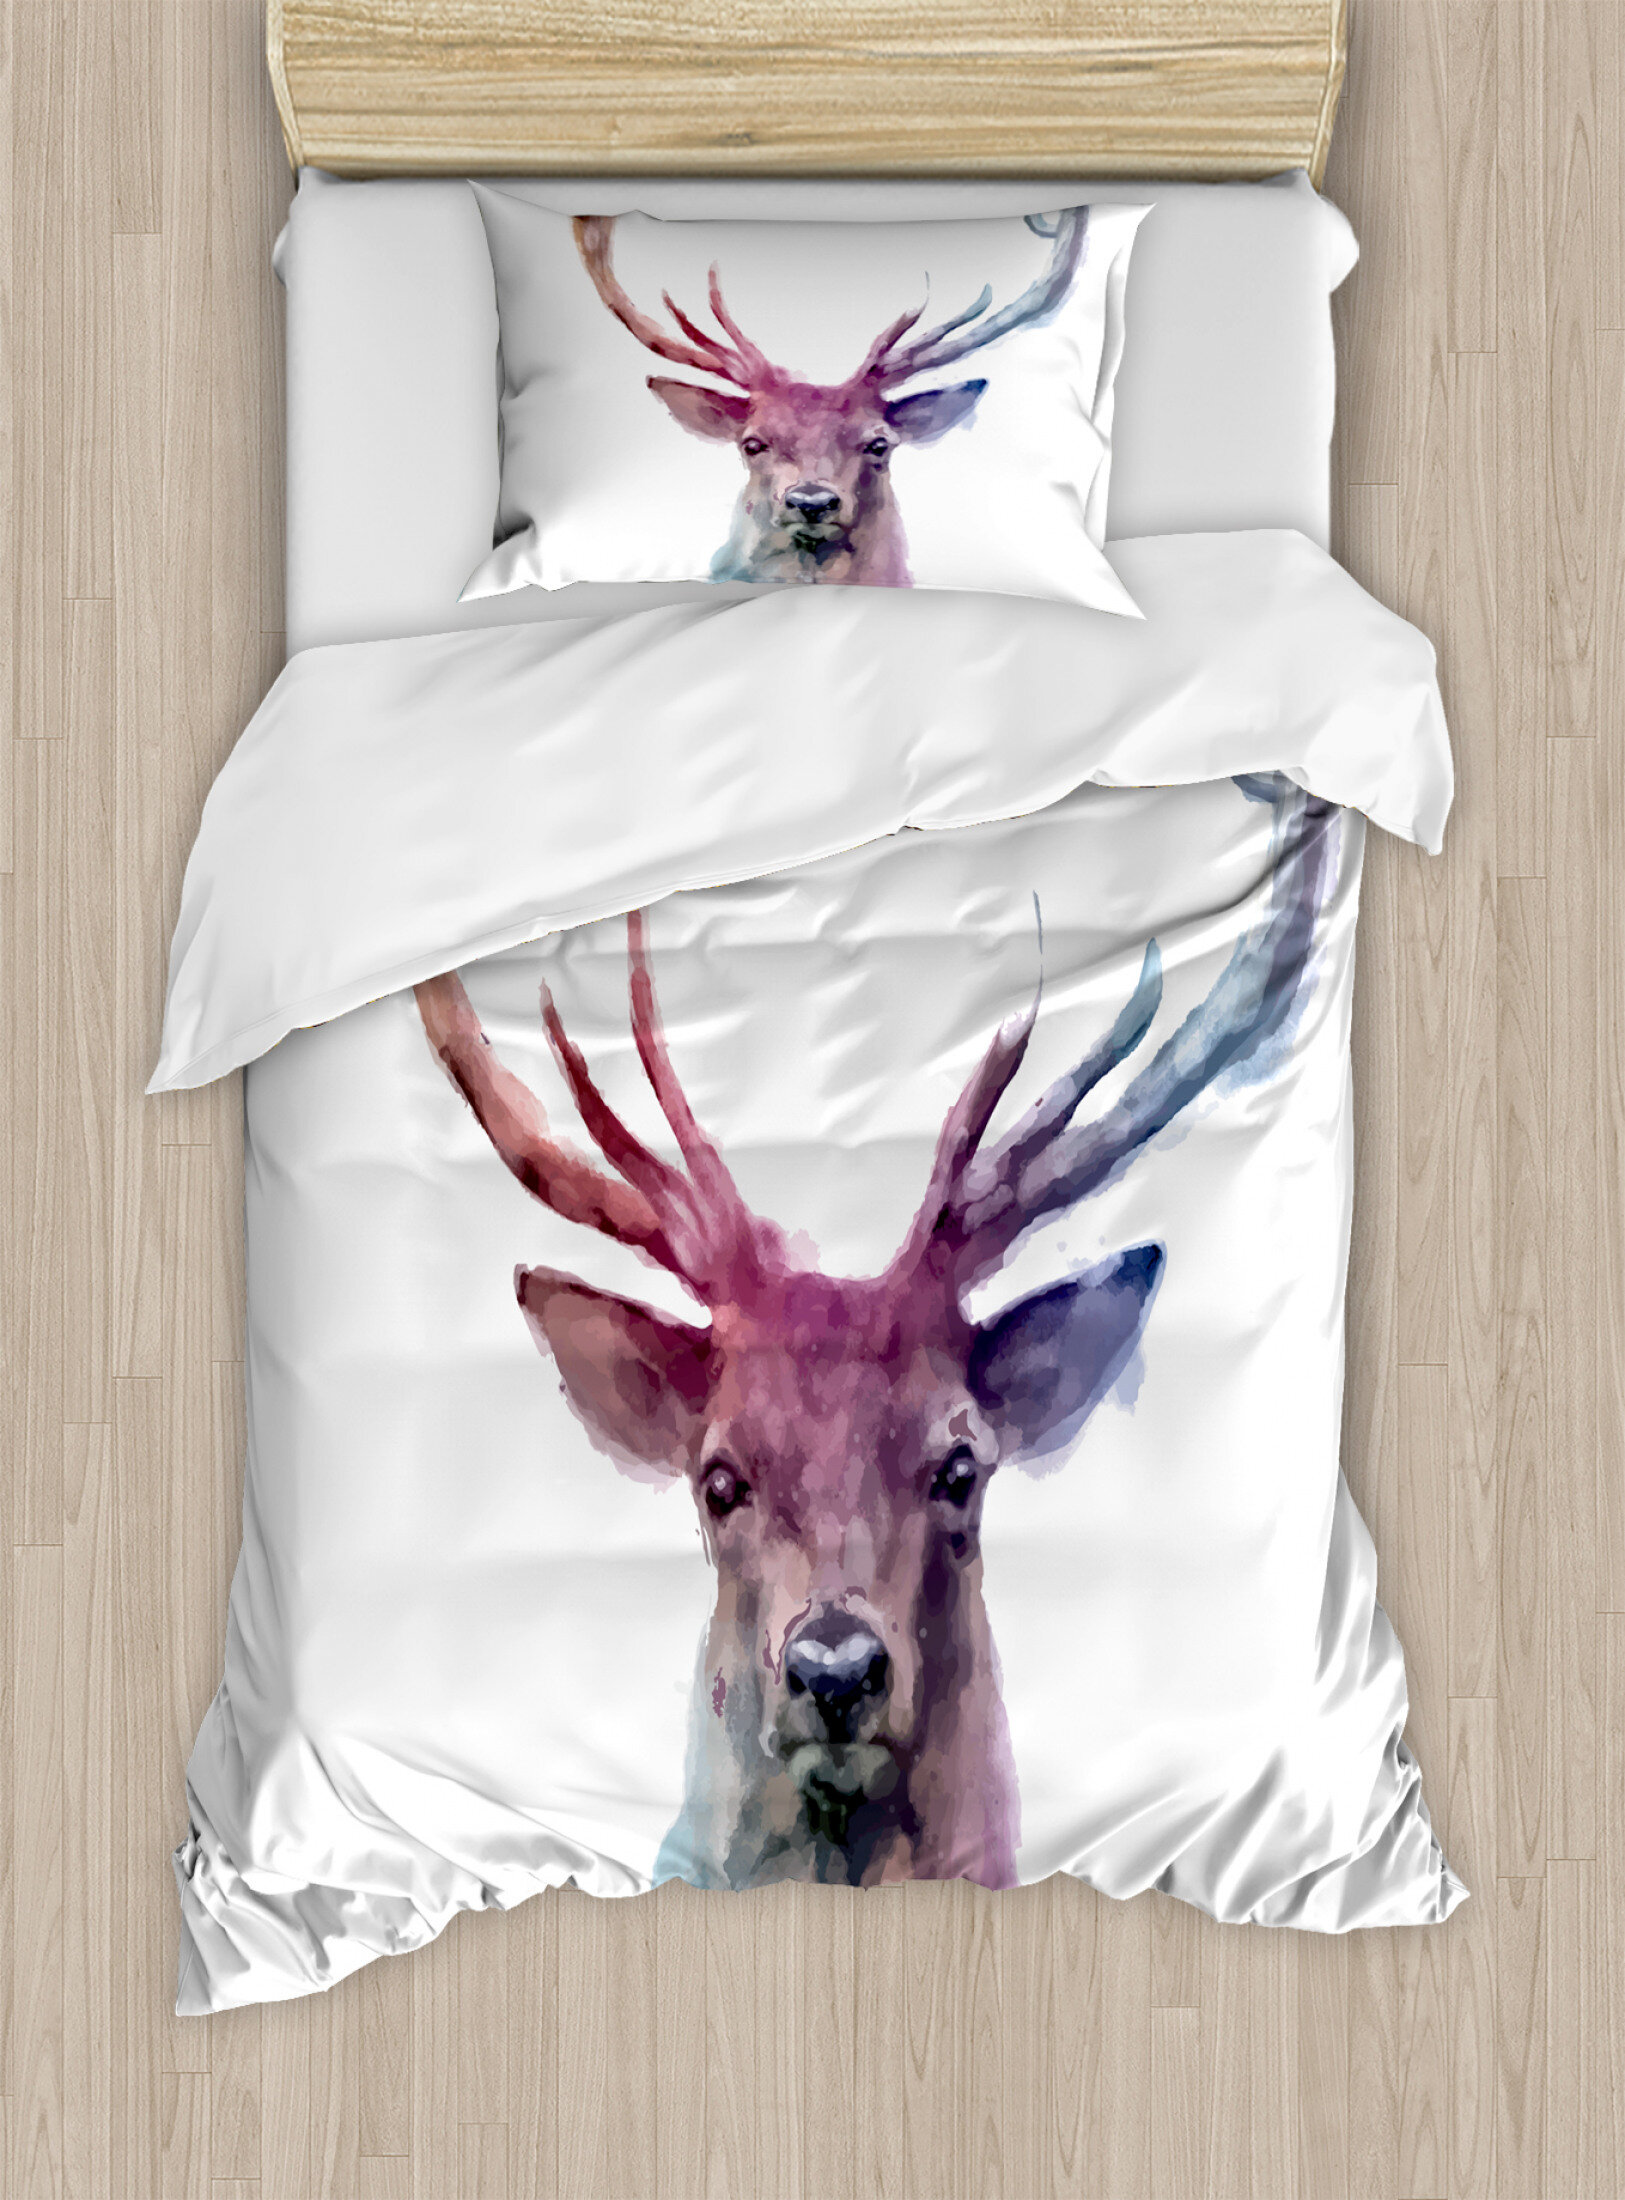 East Urban Home Ambesonne Deer Duvet Cover Set Illustration Of